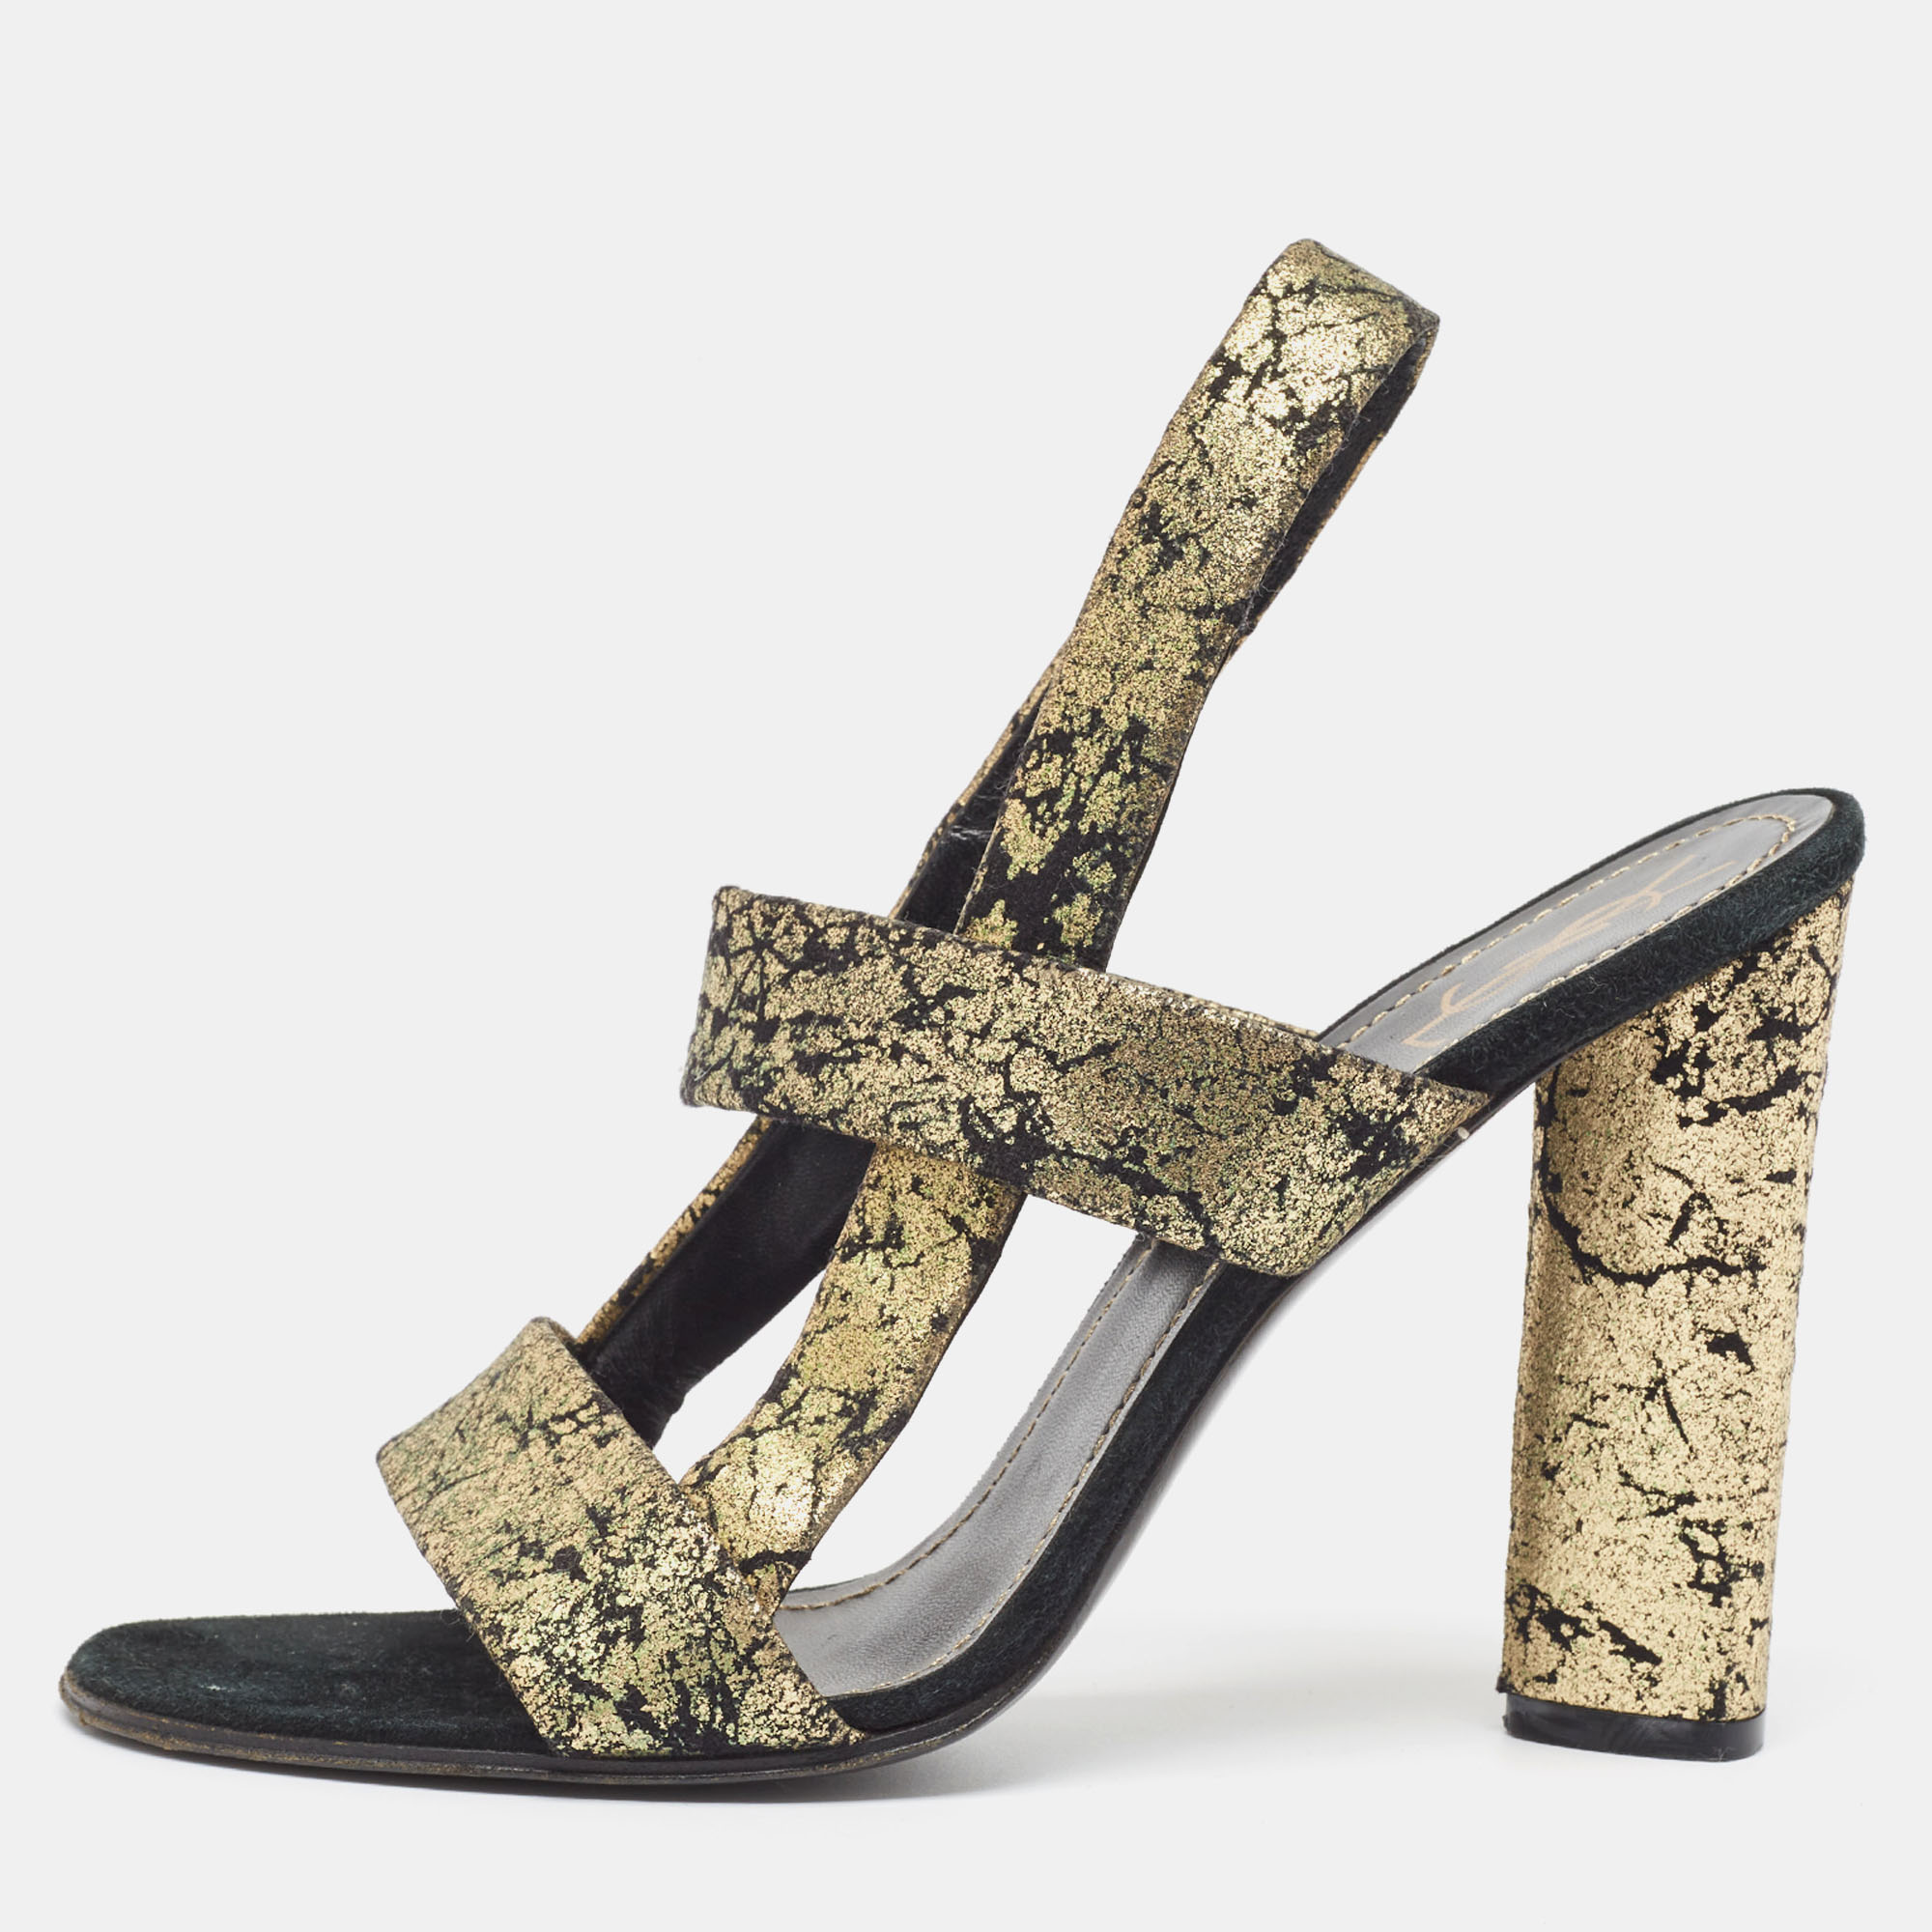 Yves saint laurent gold/black suede slingback sandals size 40